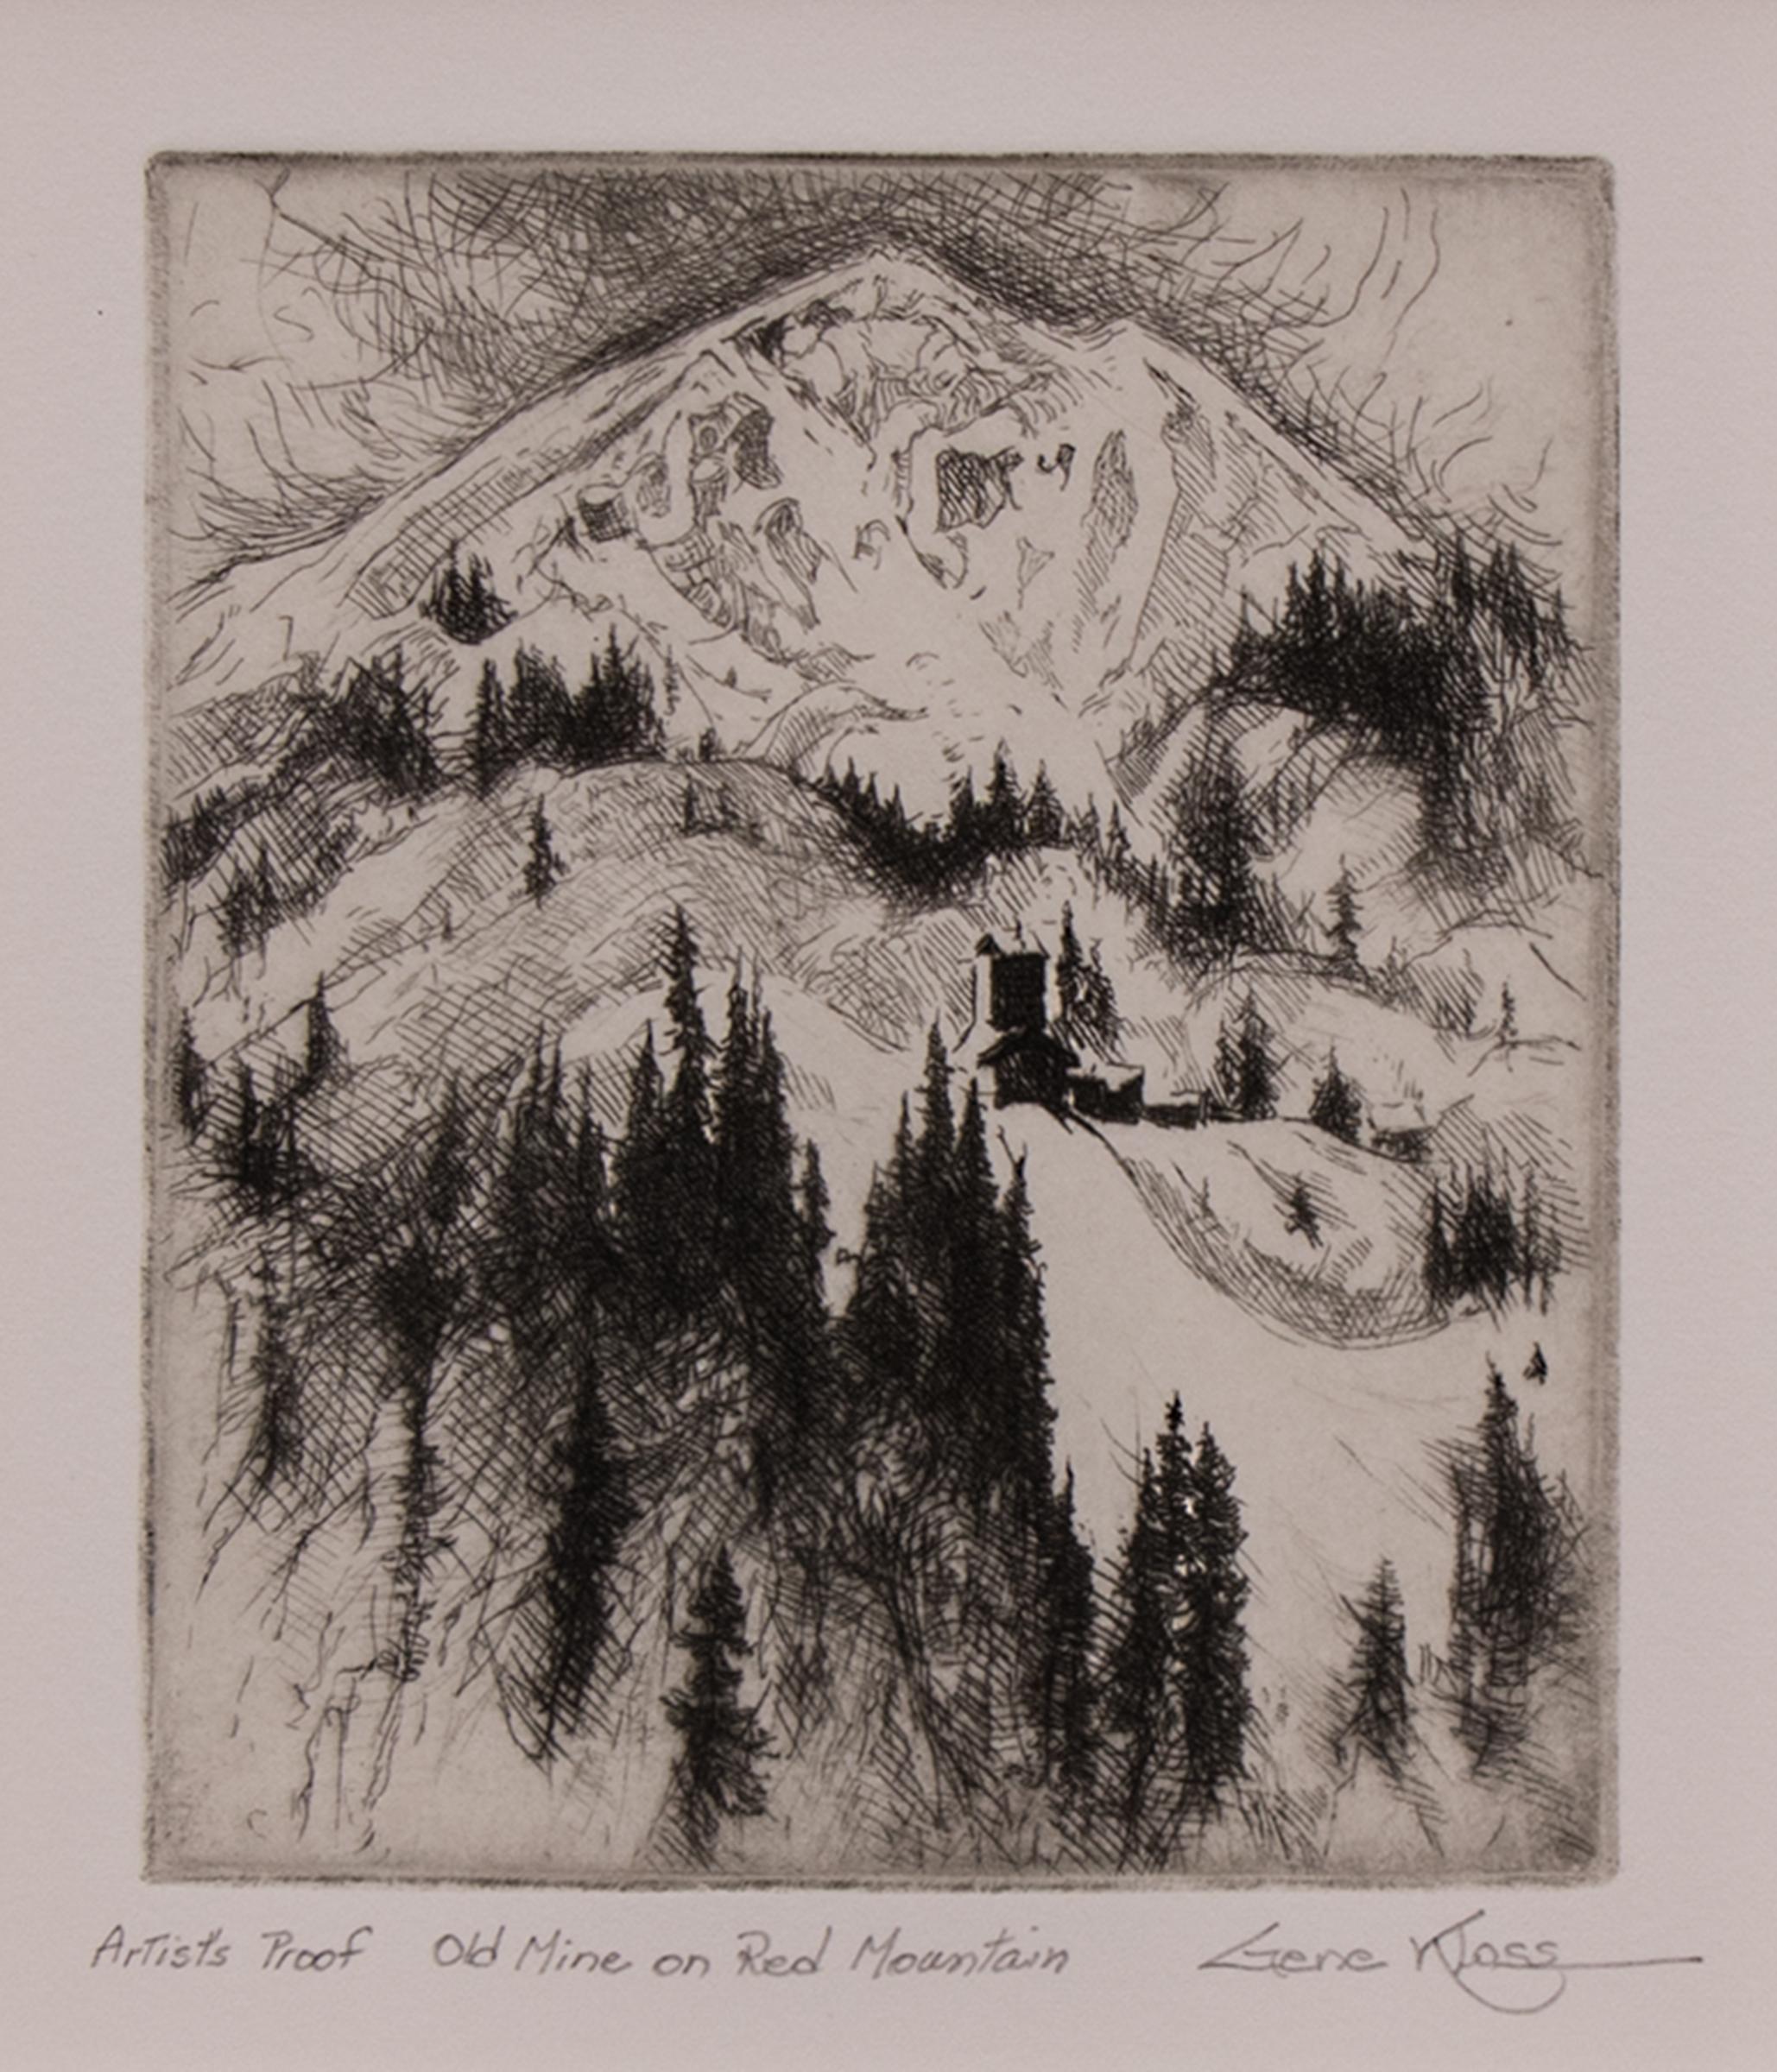 Gene Kloss Figurative Print - Old Mine on Red Mountain (Colorado); artist proof